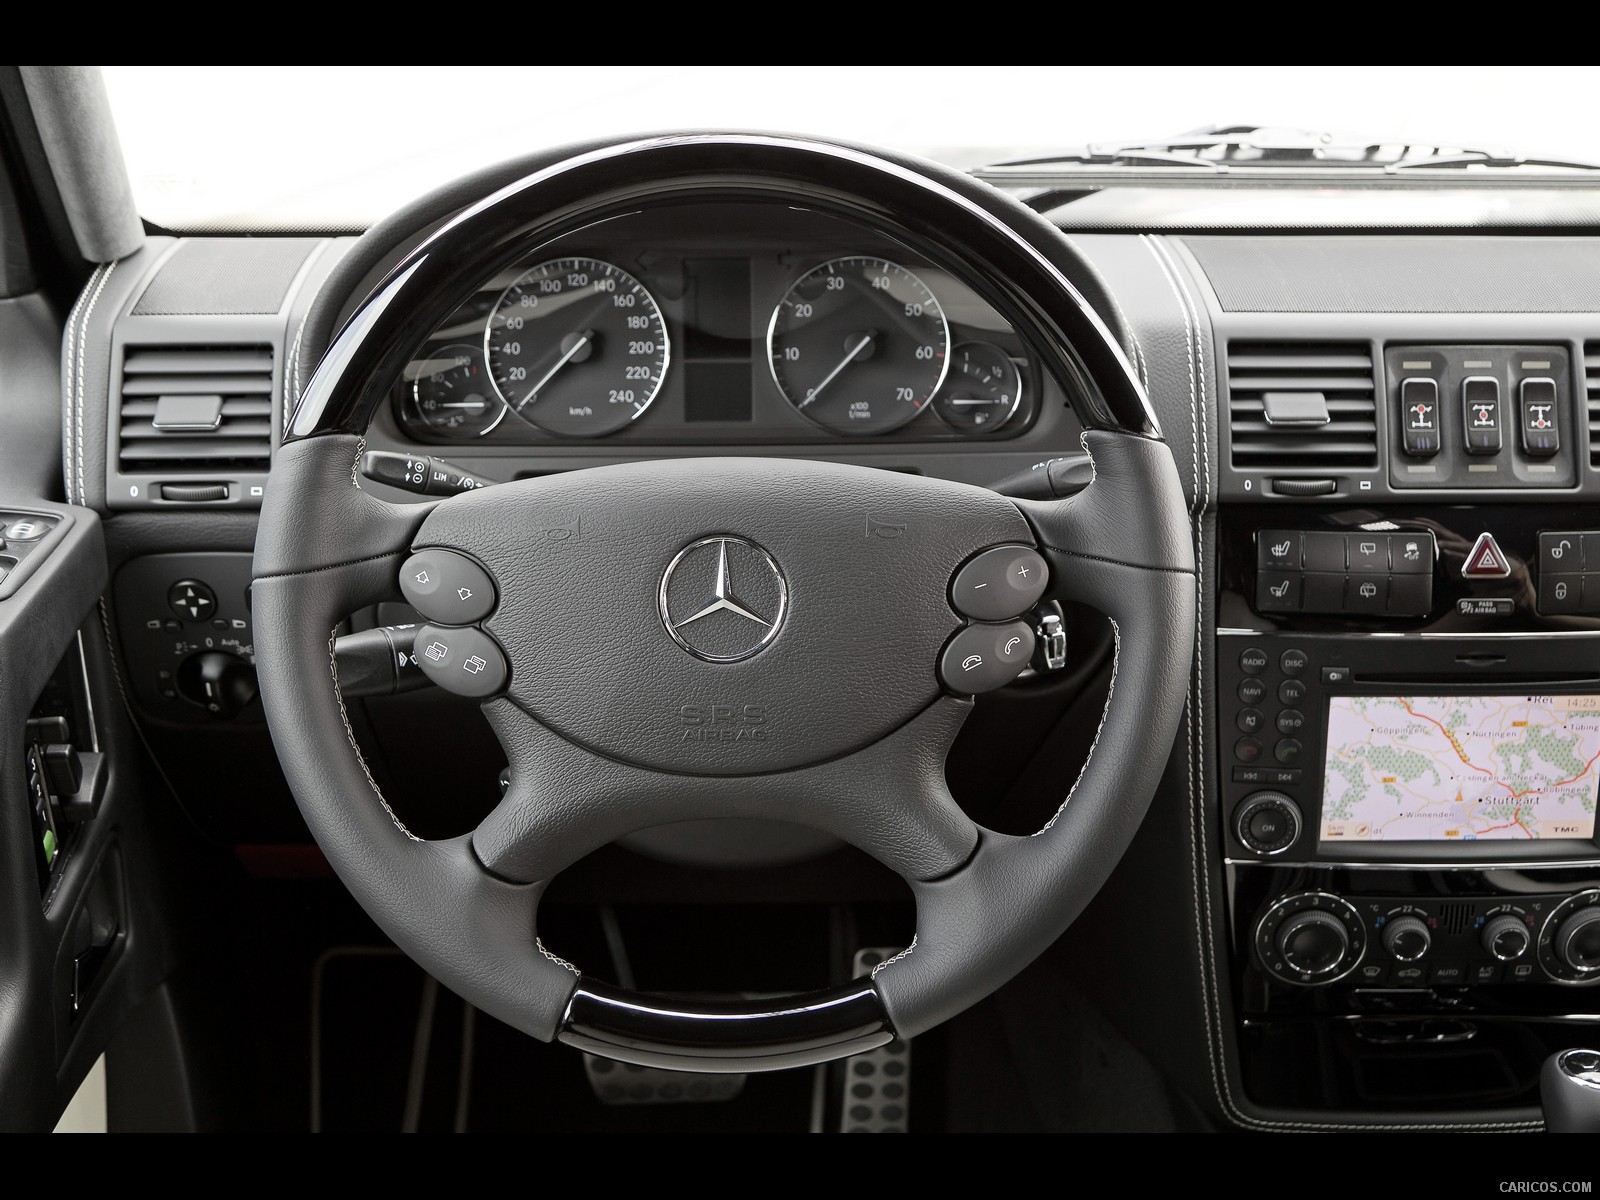 Mercedes-Benz G-Class "Edition Select" (2012)  - Interior, #11 of 13